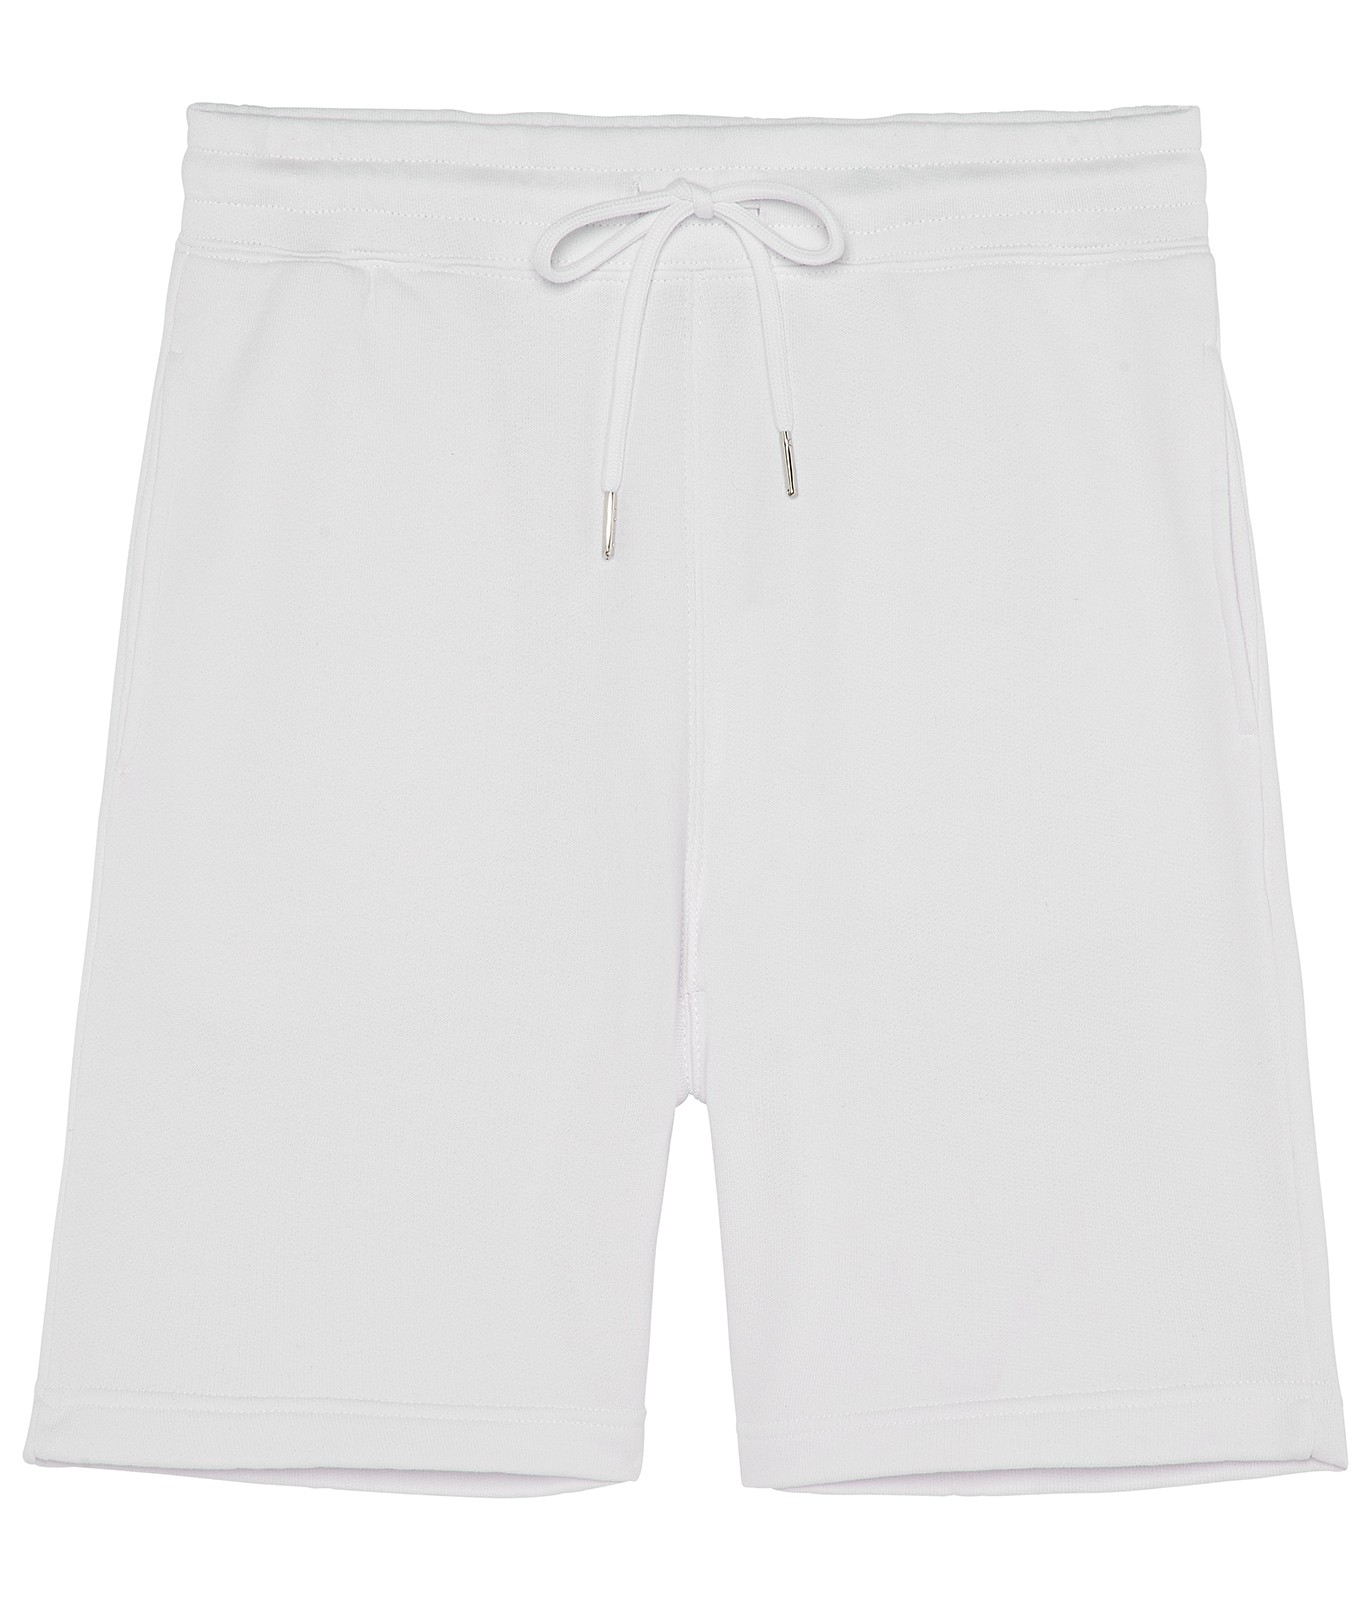 Men's cotton jogging shorts for men|Quality brand - Europann